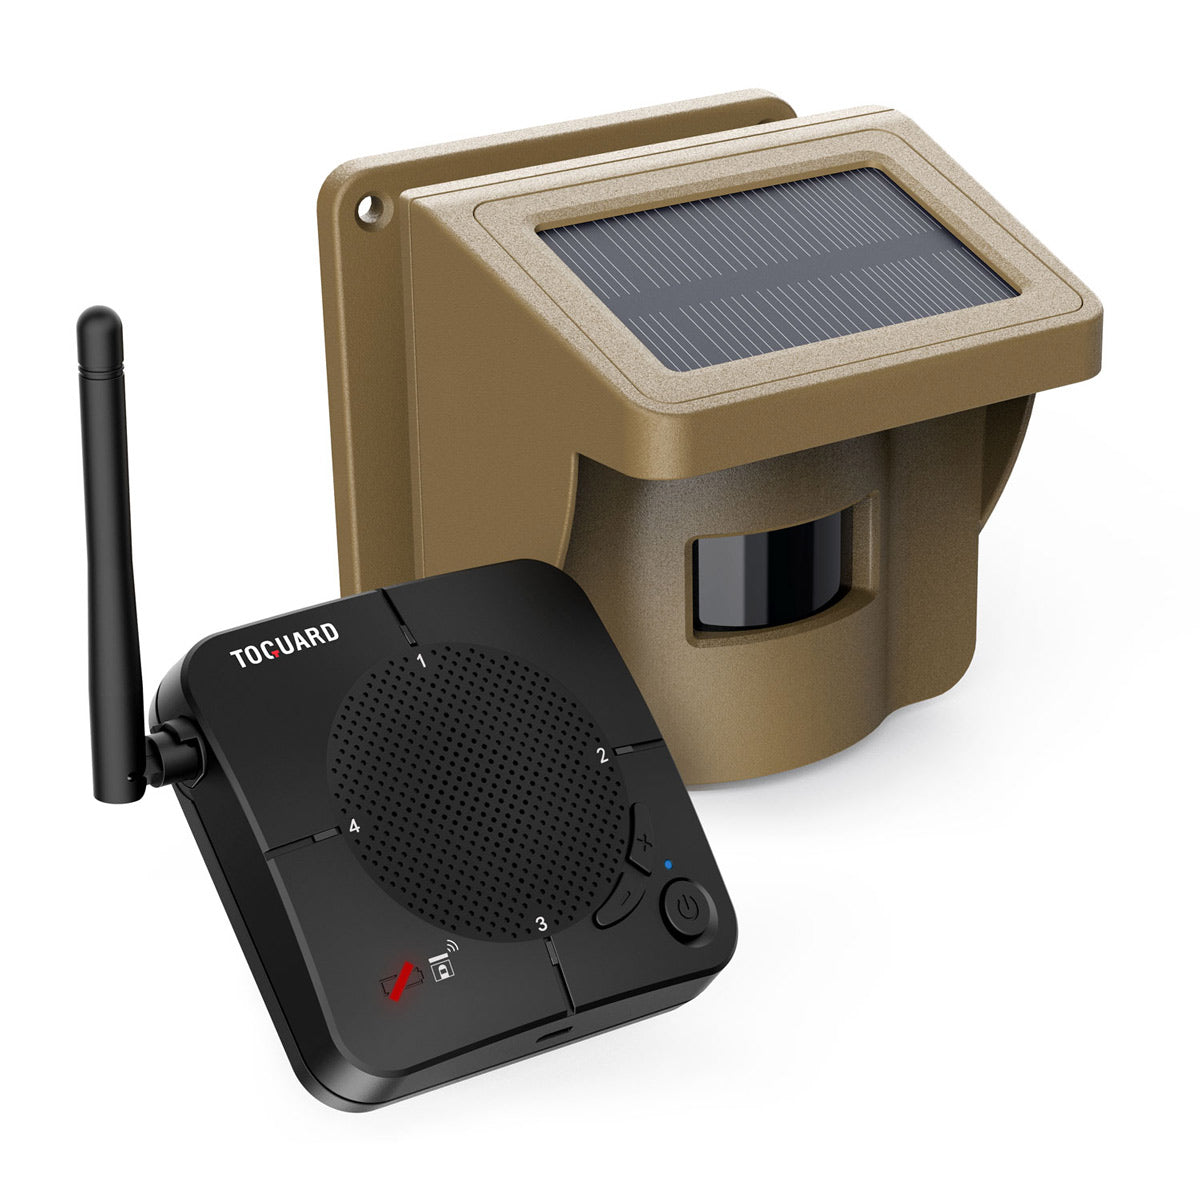 Outdoor Motion Sensor Driveway System | TOGUARD W10 – camera